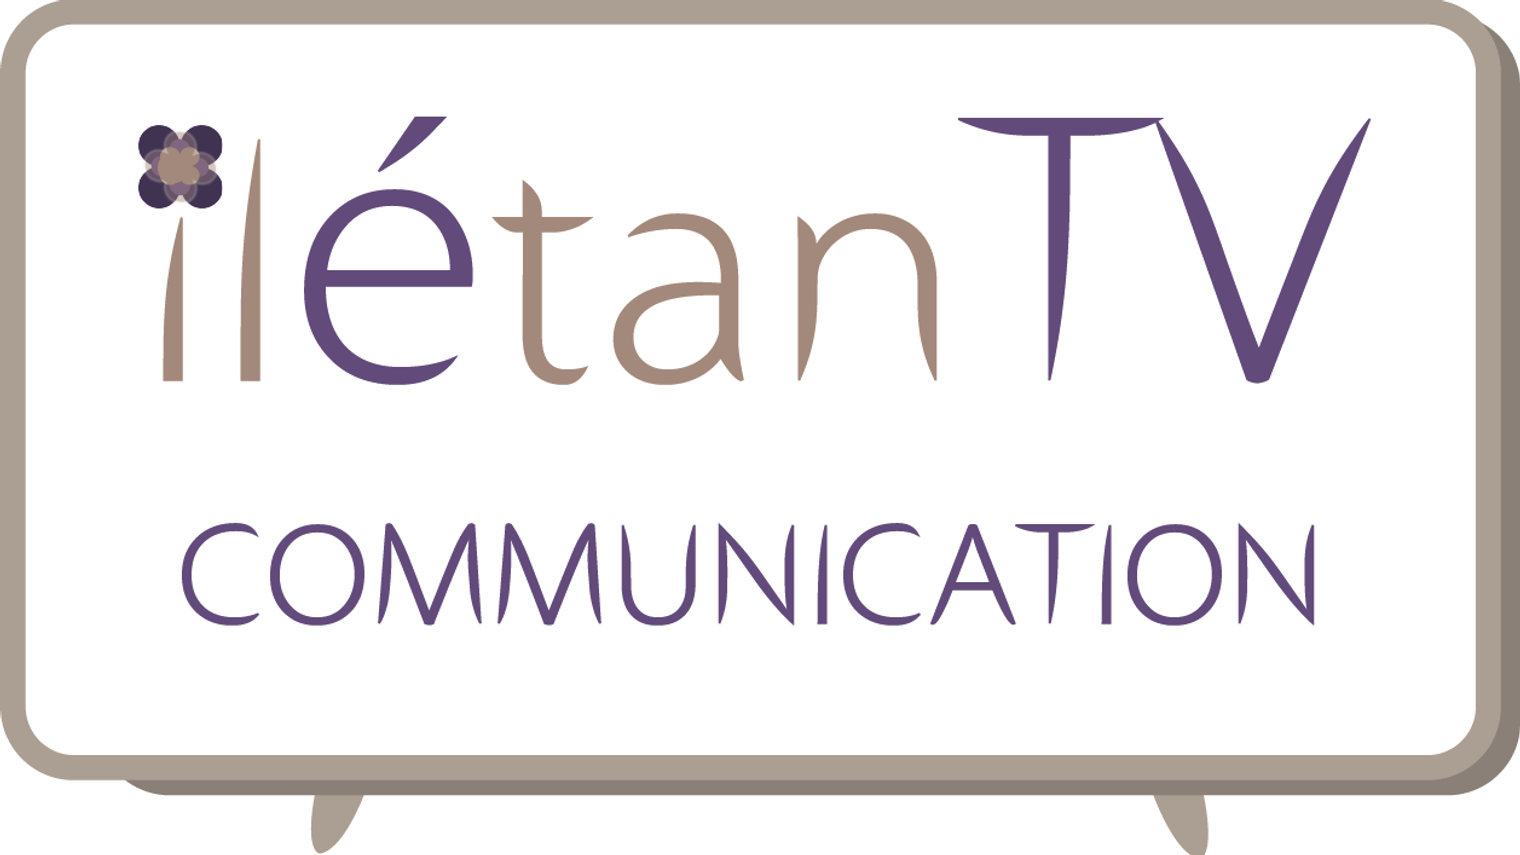 ILETAN TV COMMUNICATION